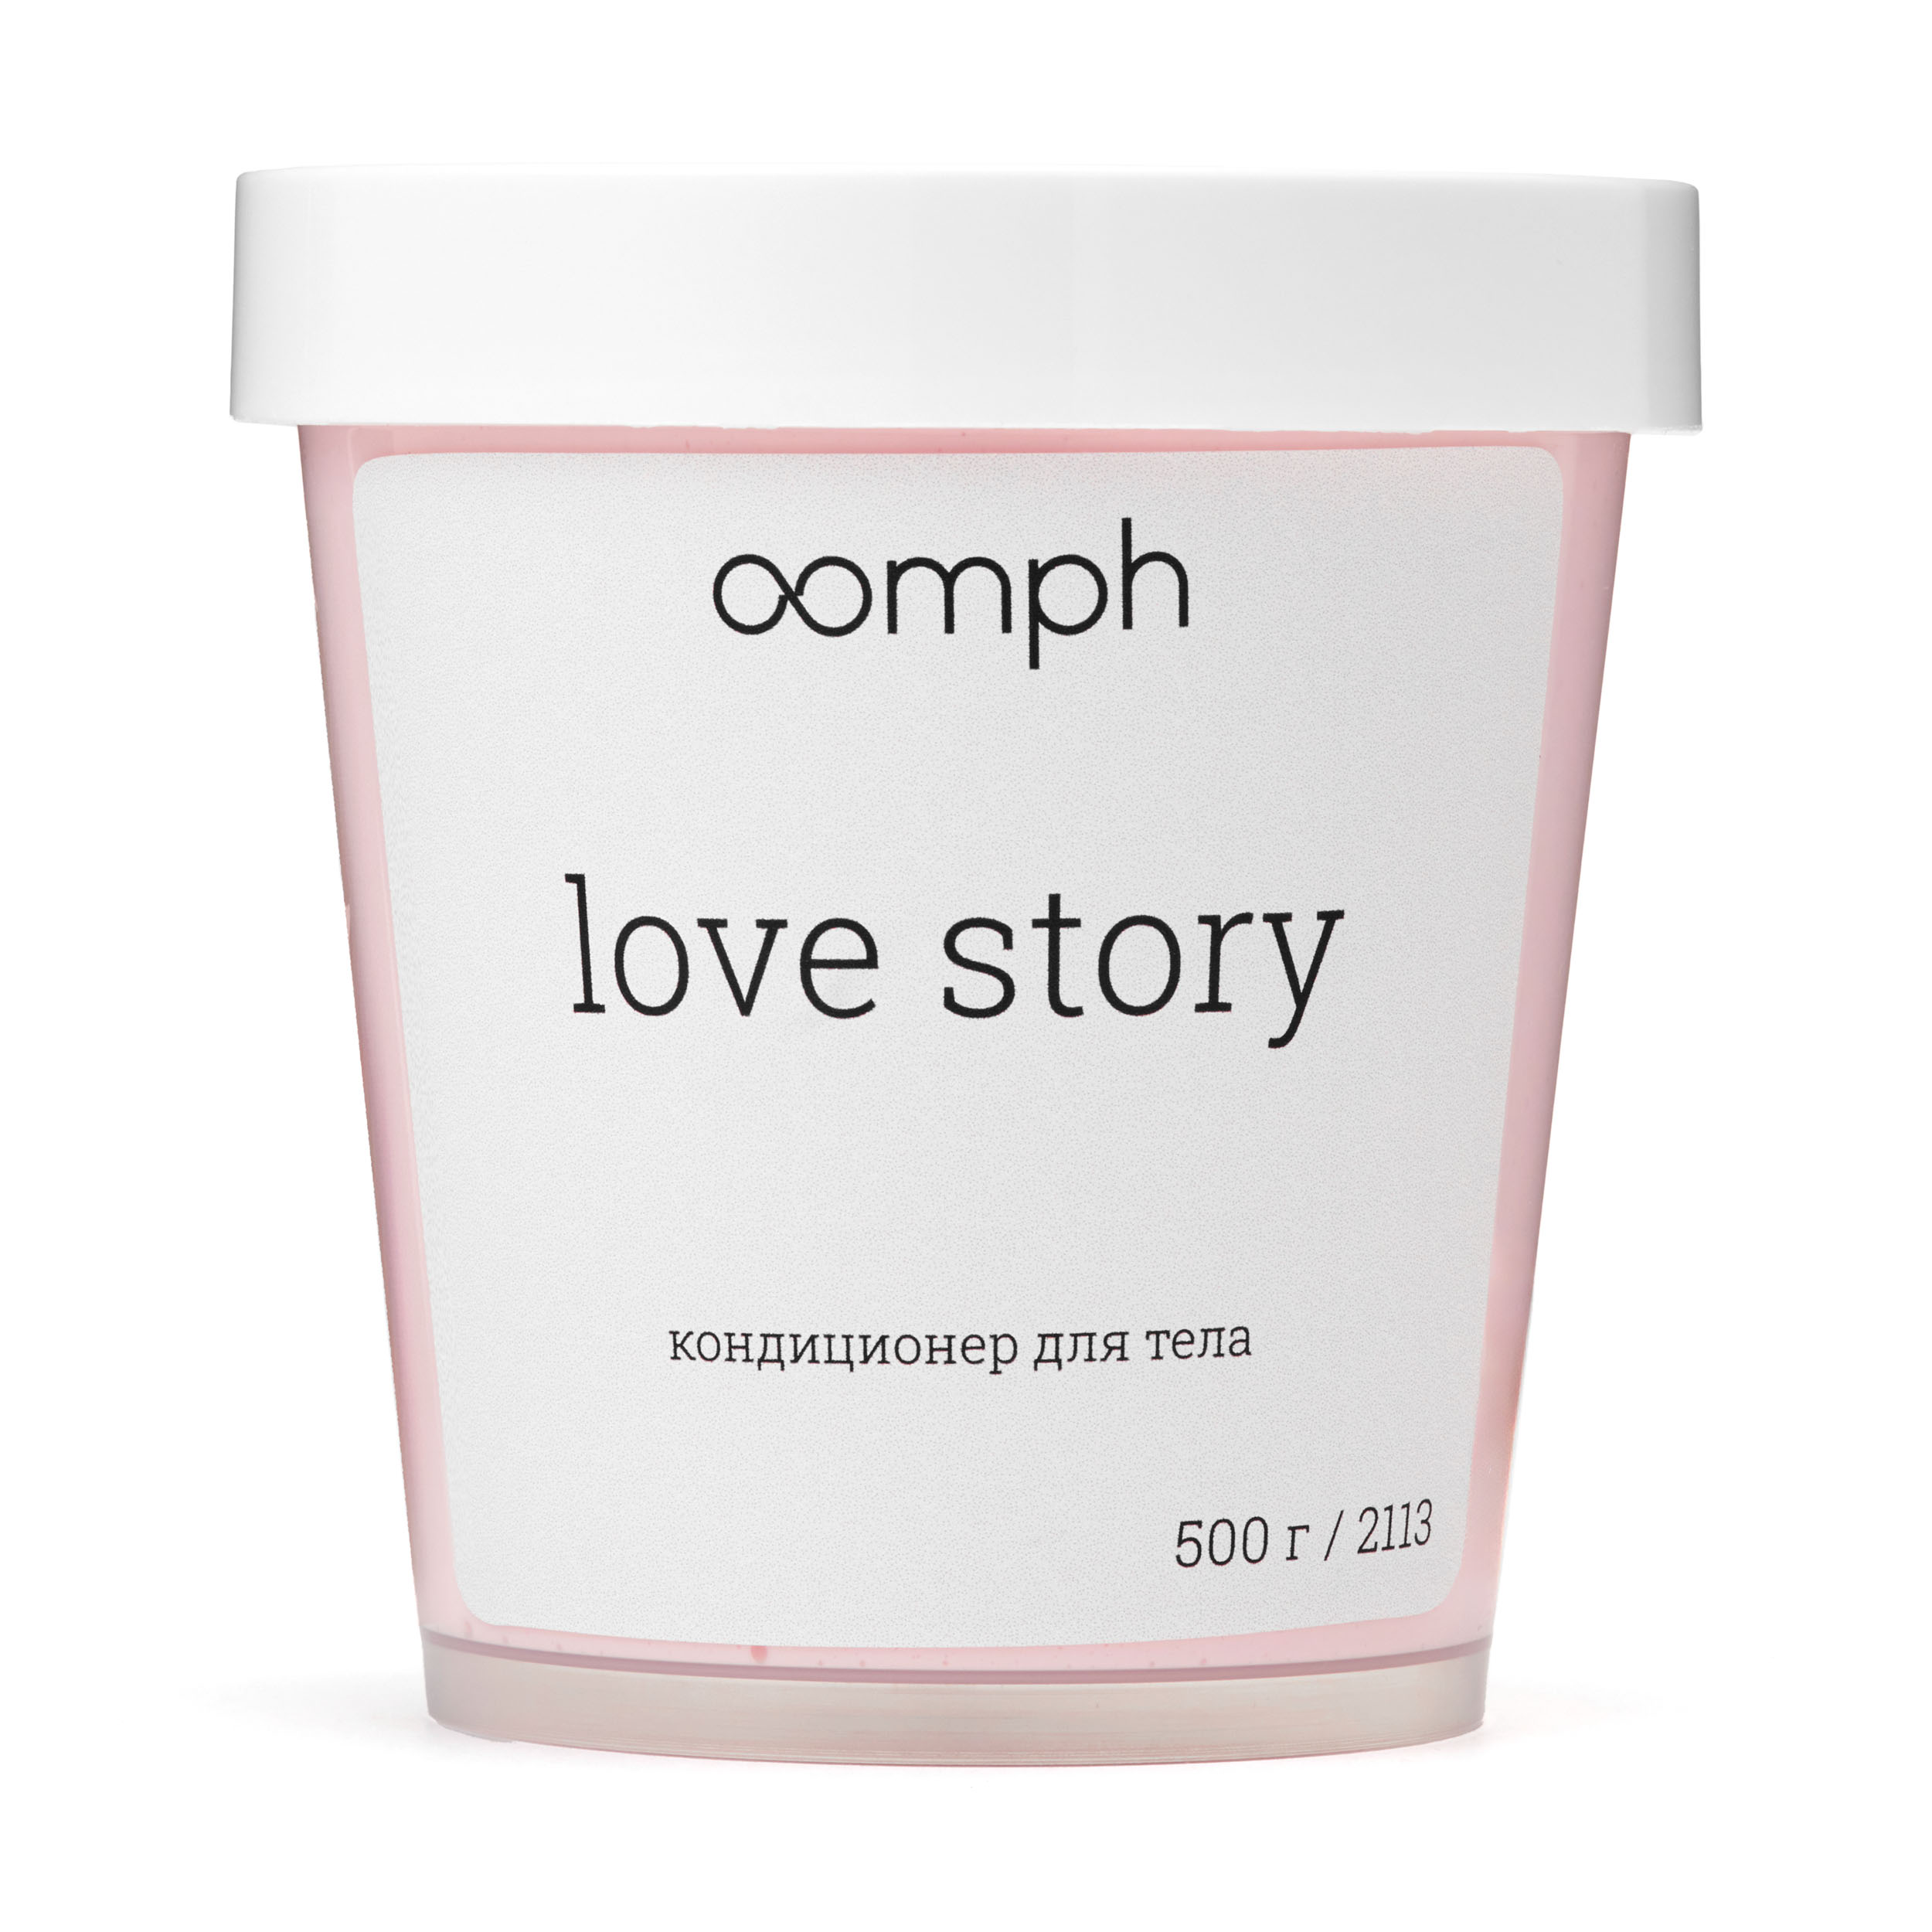 Кондиционер для тела OOMPH Love story 500г ромео и джульетта шекспир уильям